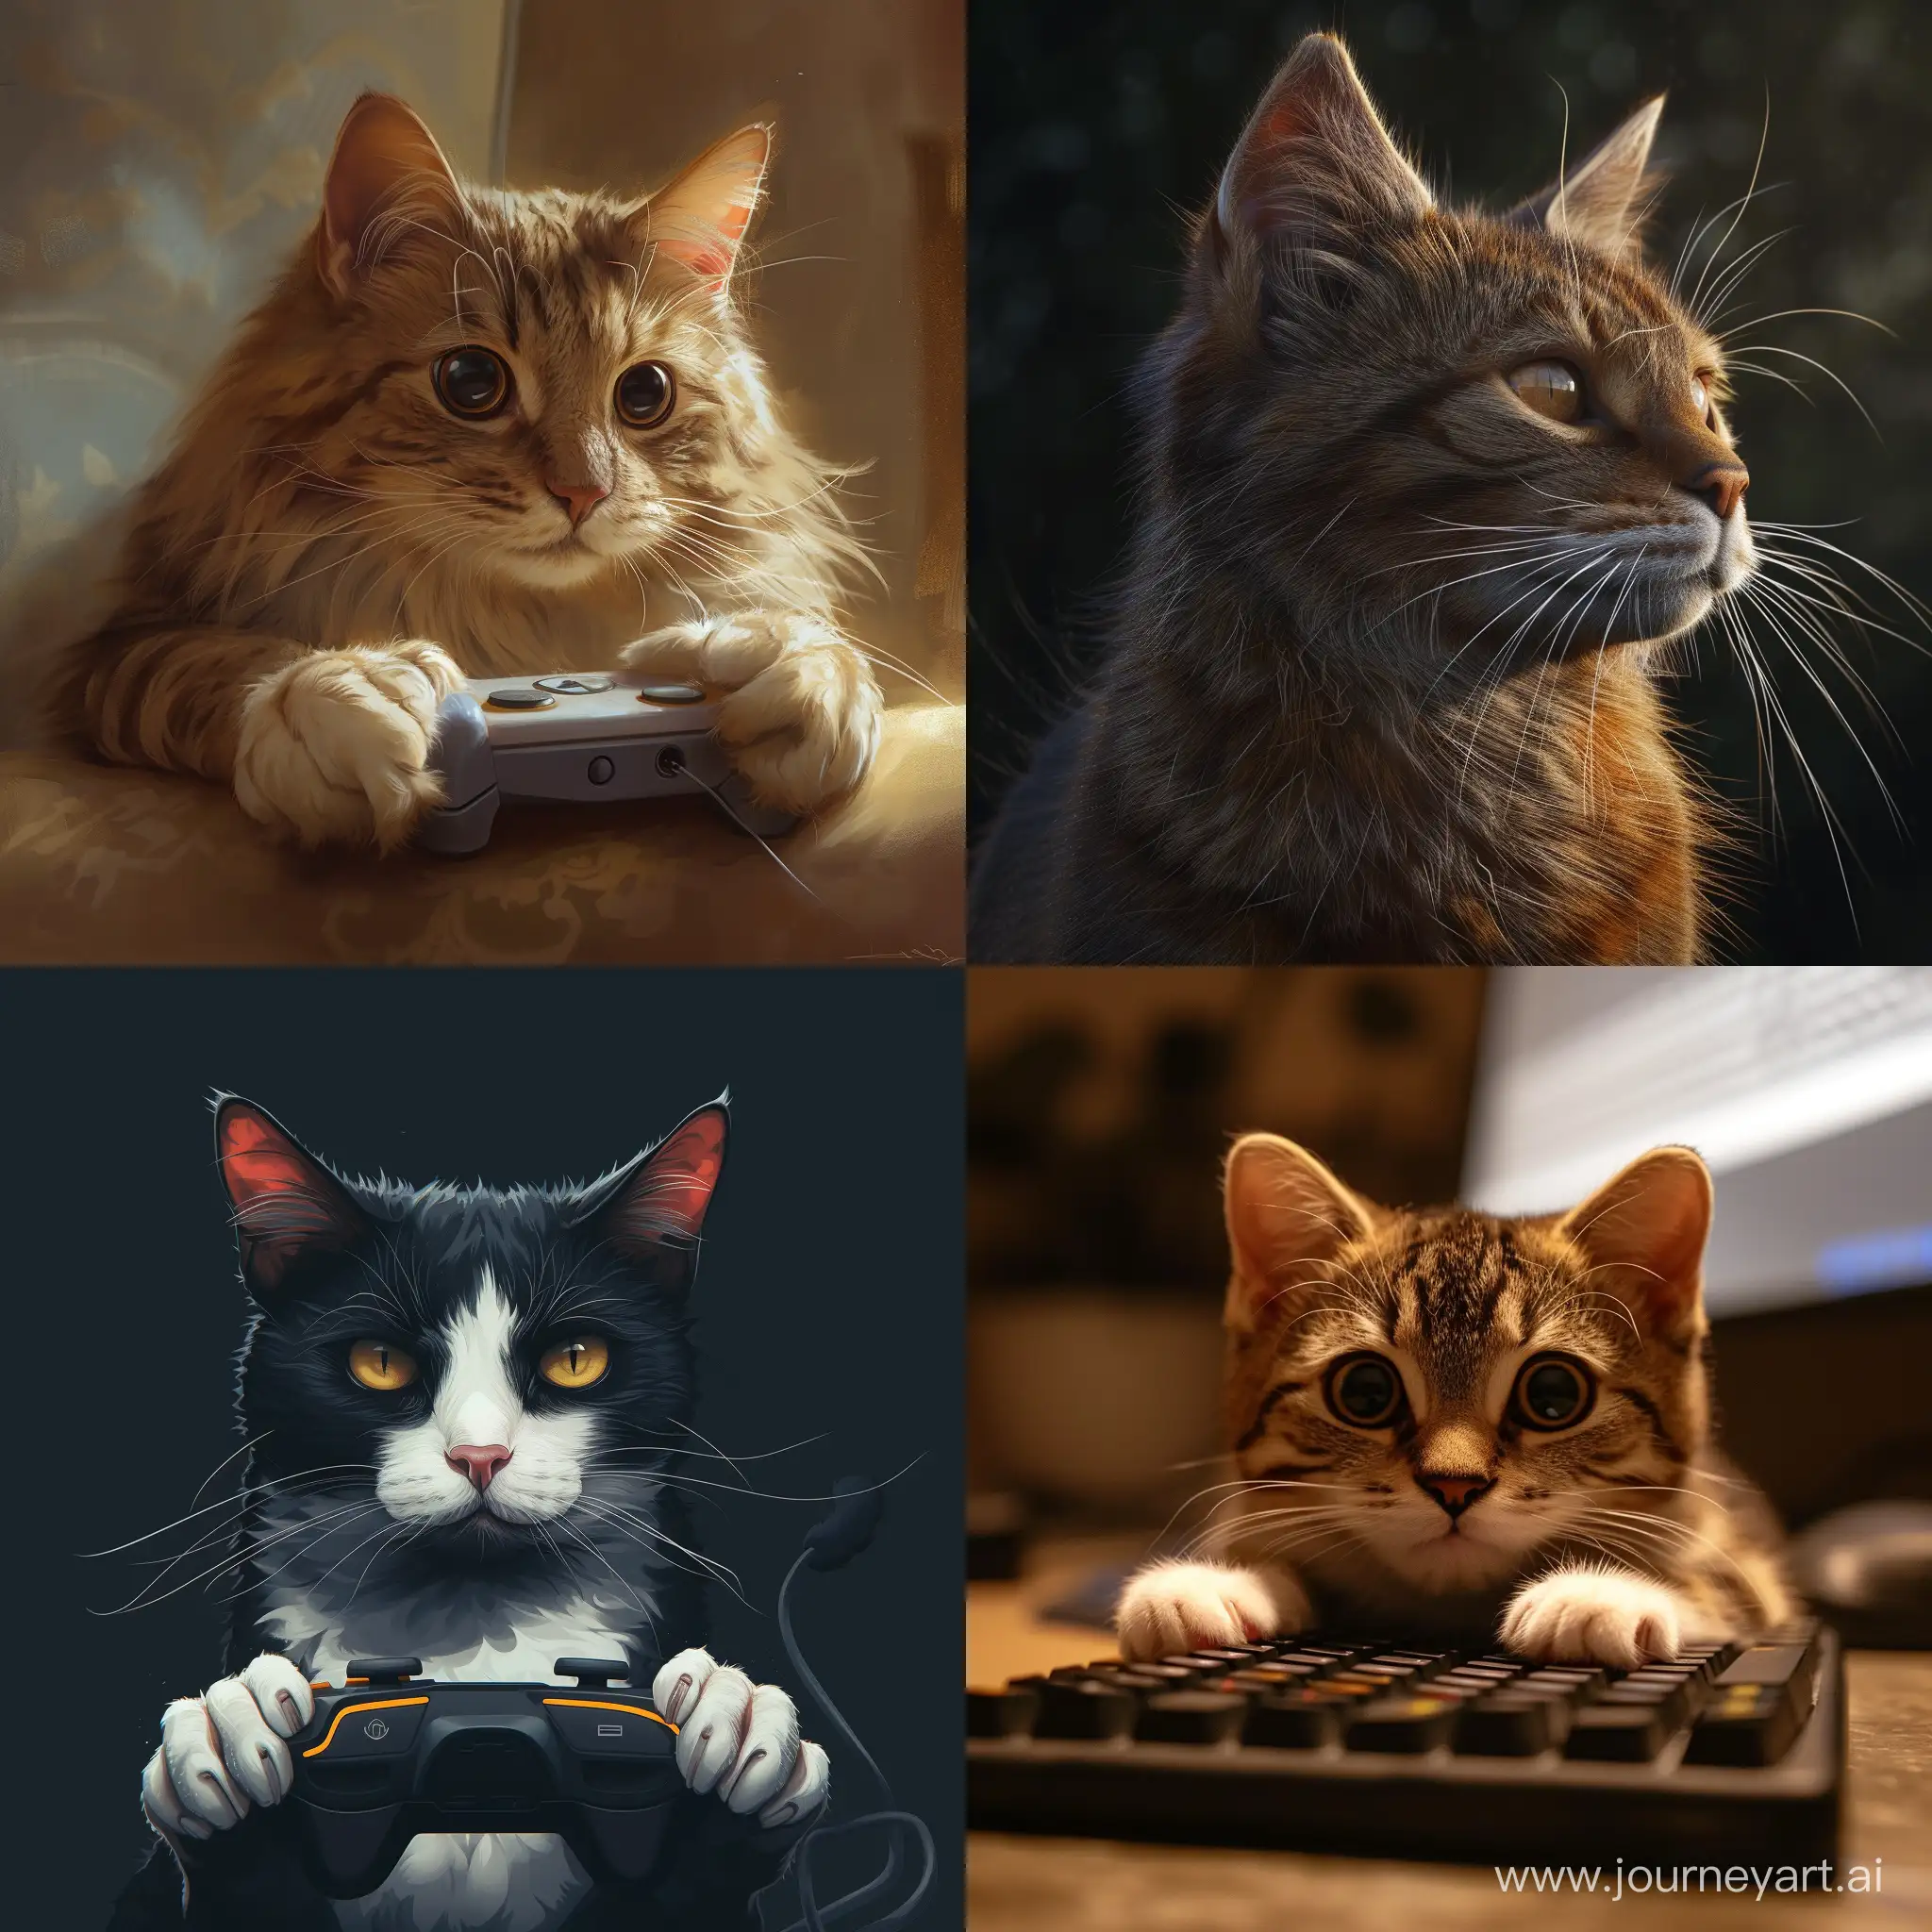 Cat game programmer, hyperrealism